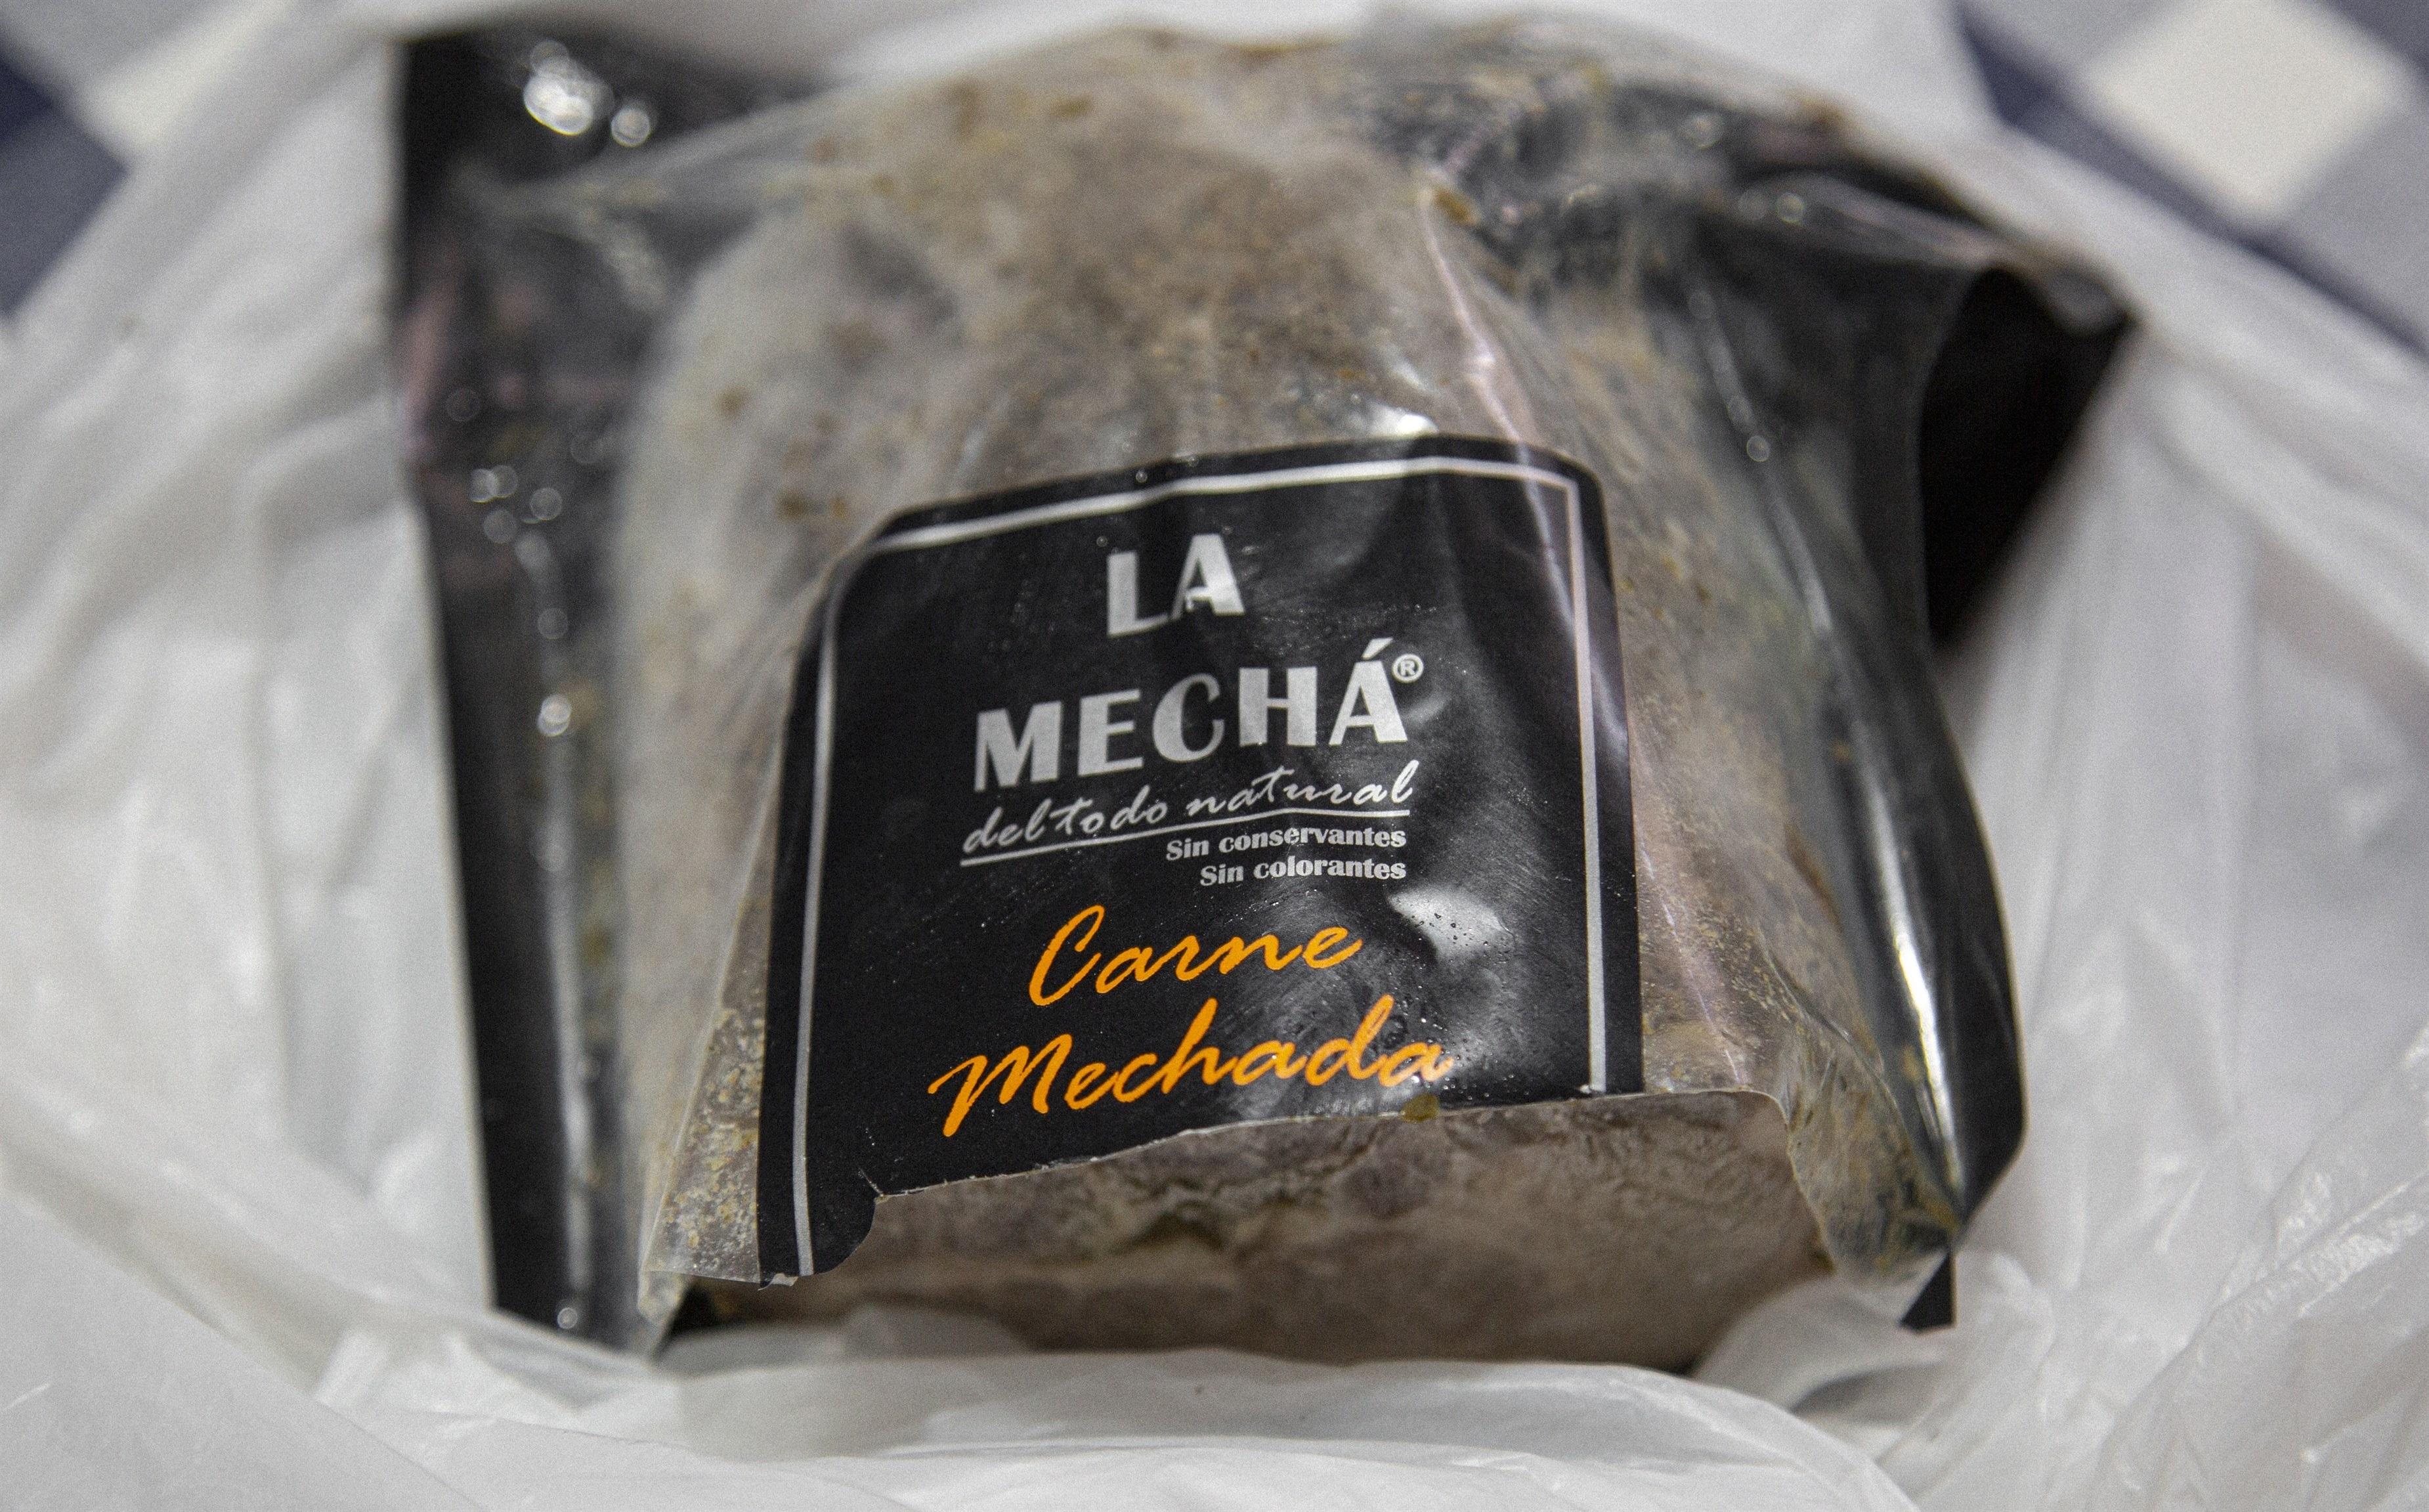 La carne mechada La Mechá. Fuente: Europa Press.